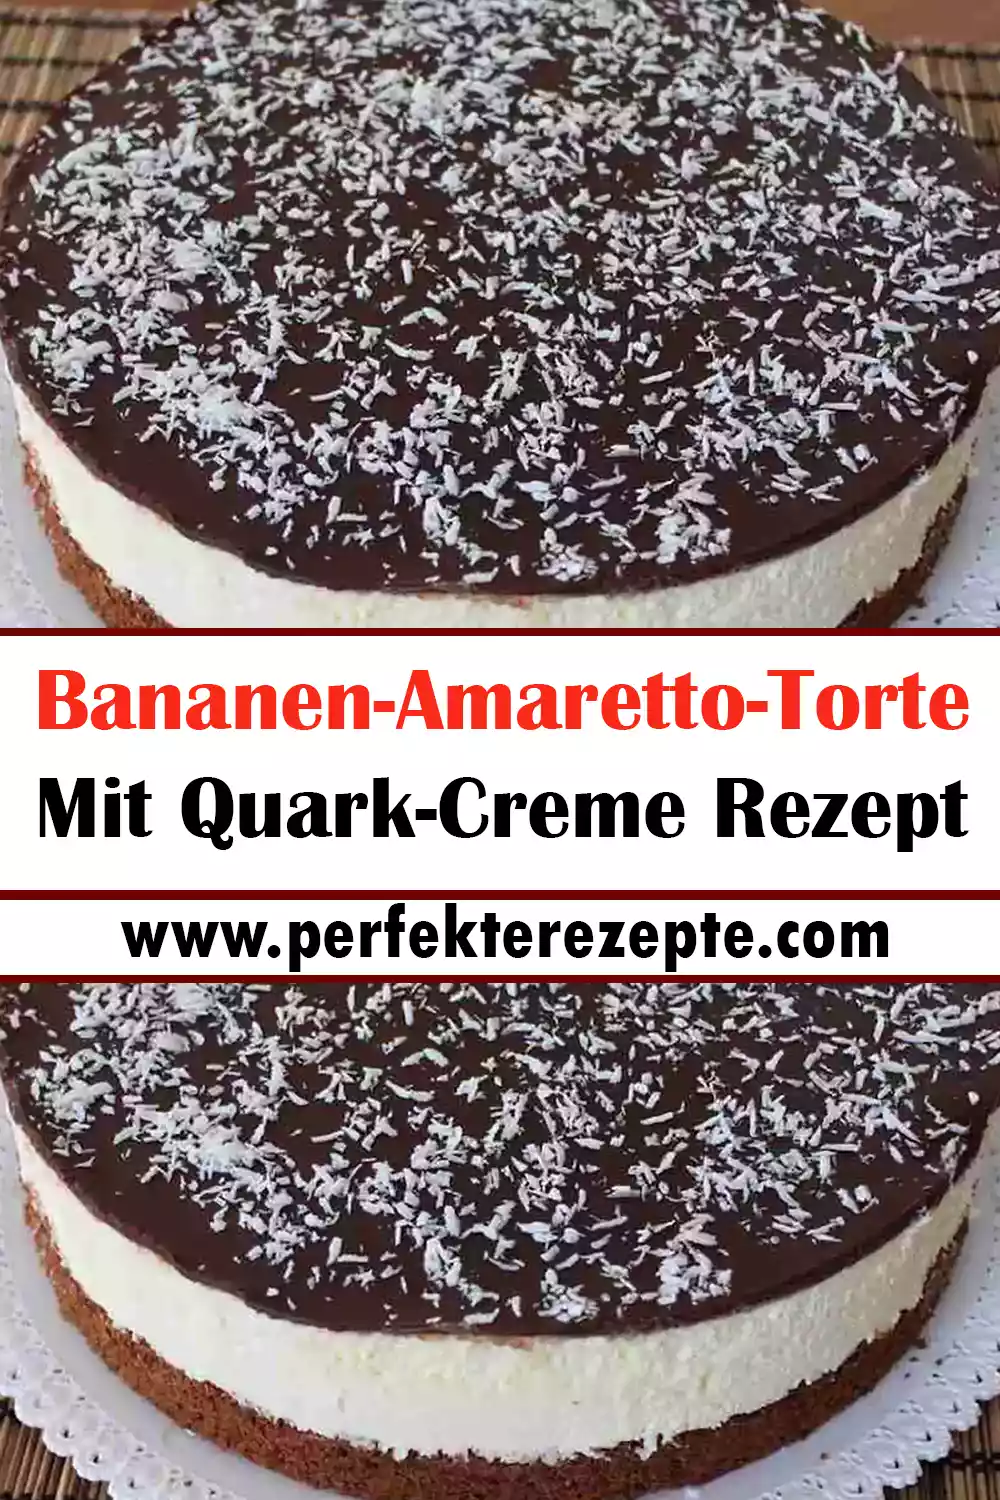 Bananen-Amaretto-Torte Mit Quark-Creme Rezept